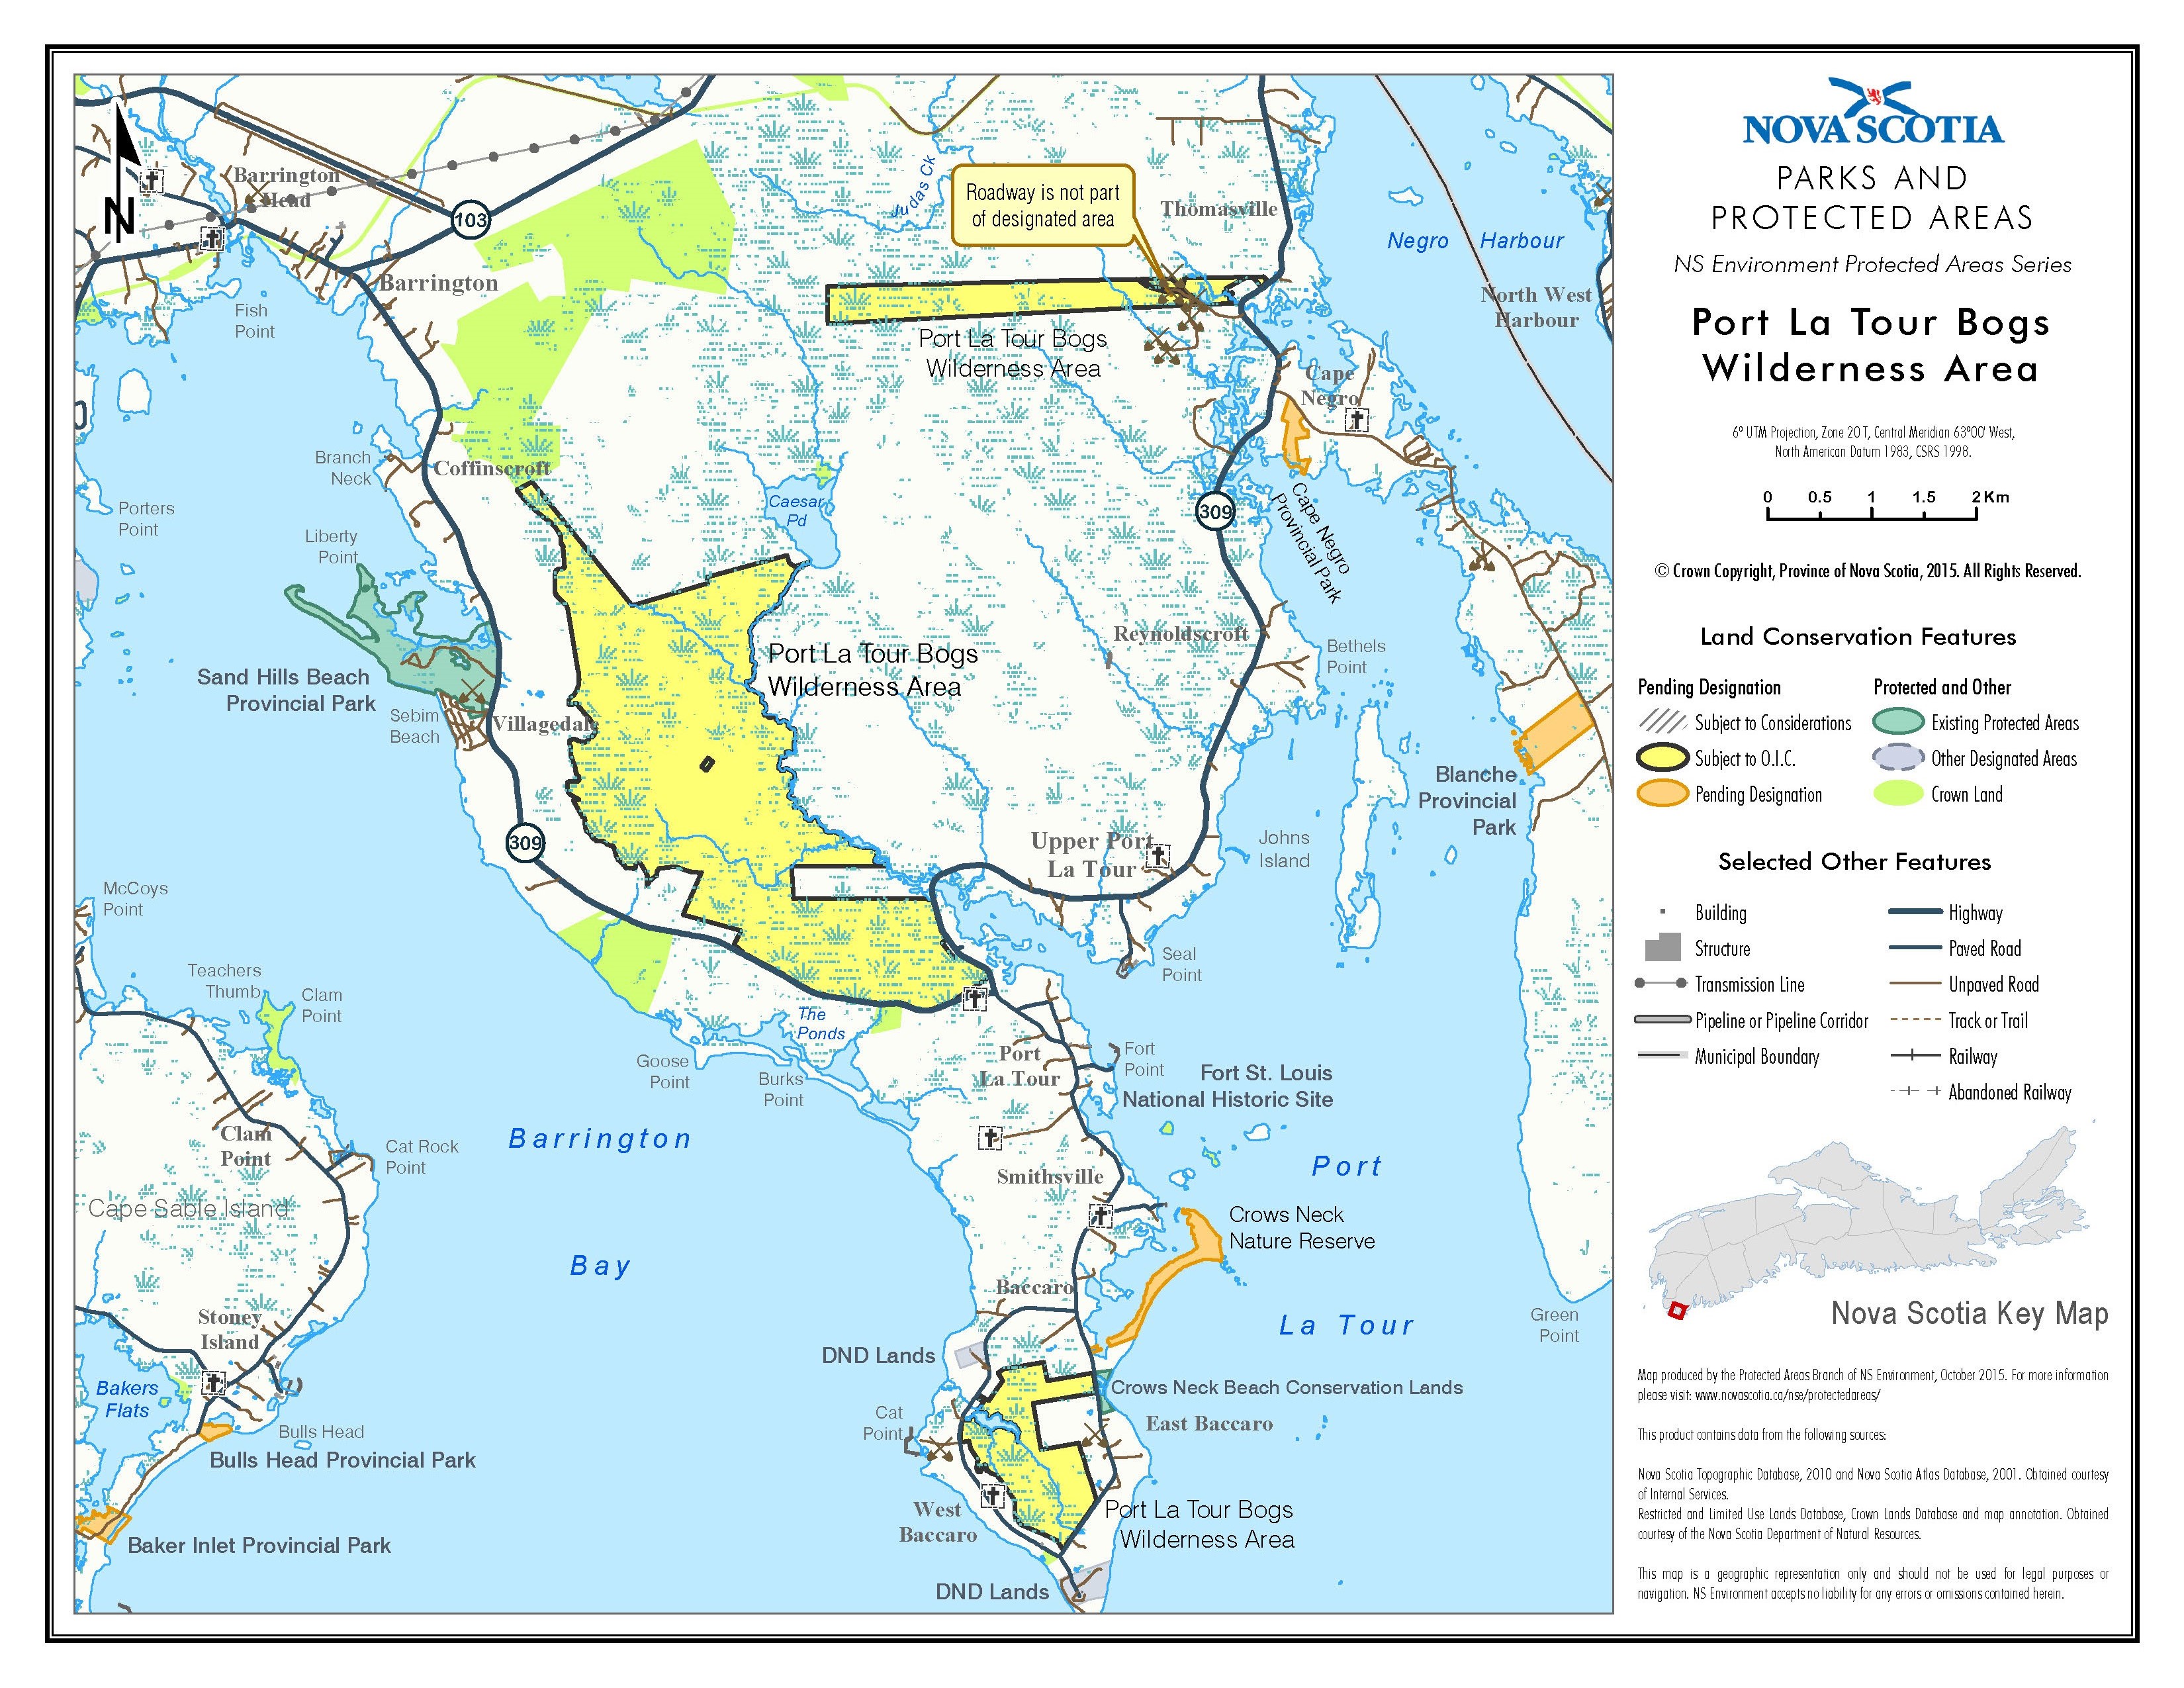 Approximate boundaries of Port La Tour Bogs Wilderness Area